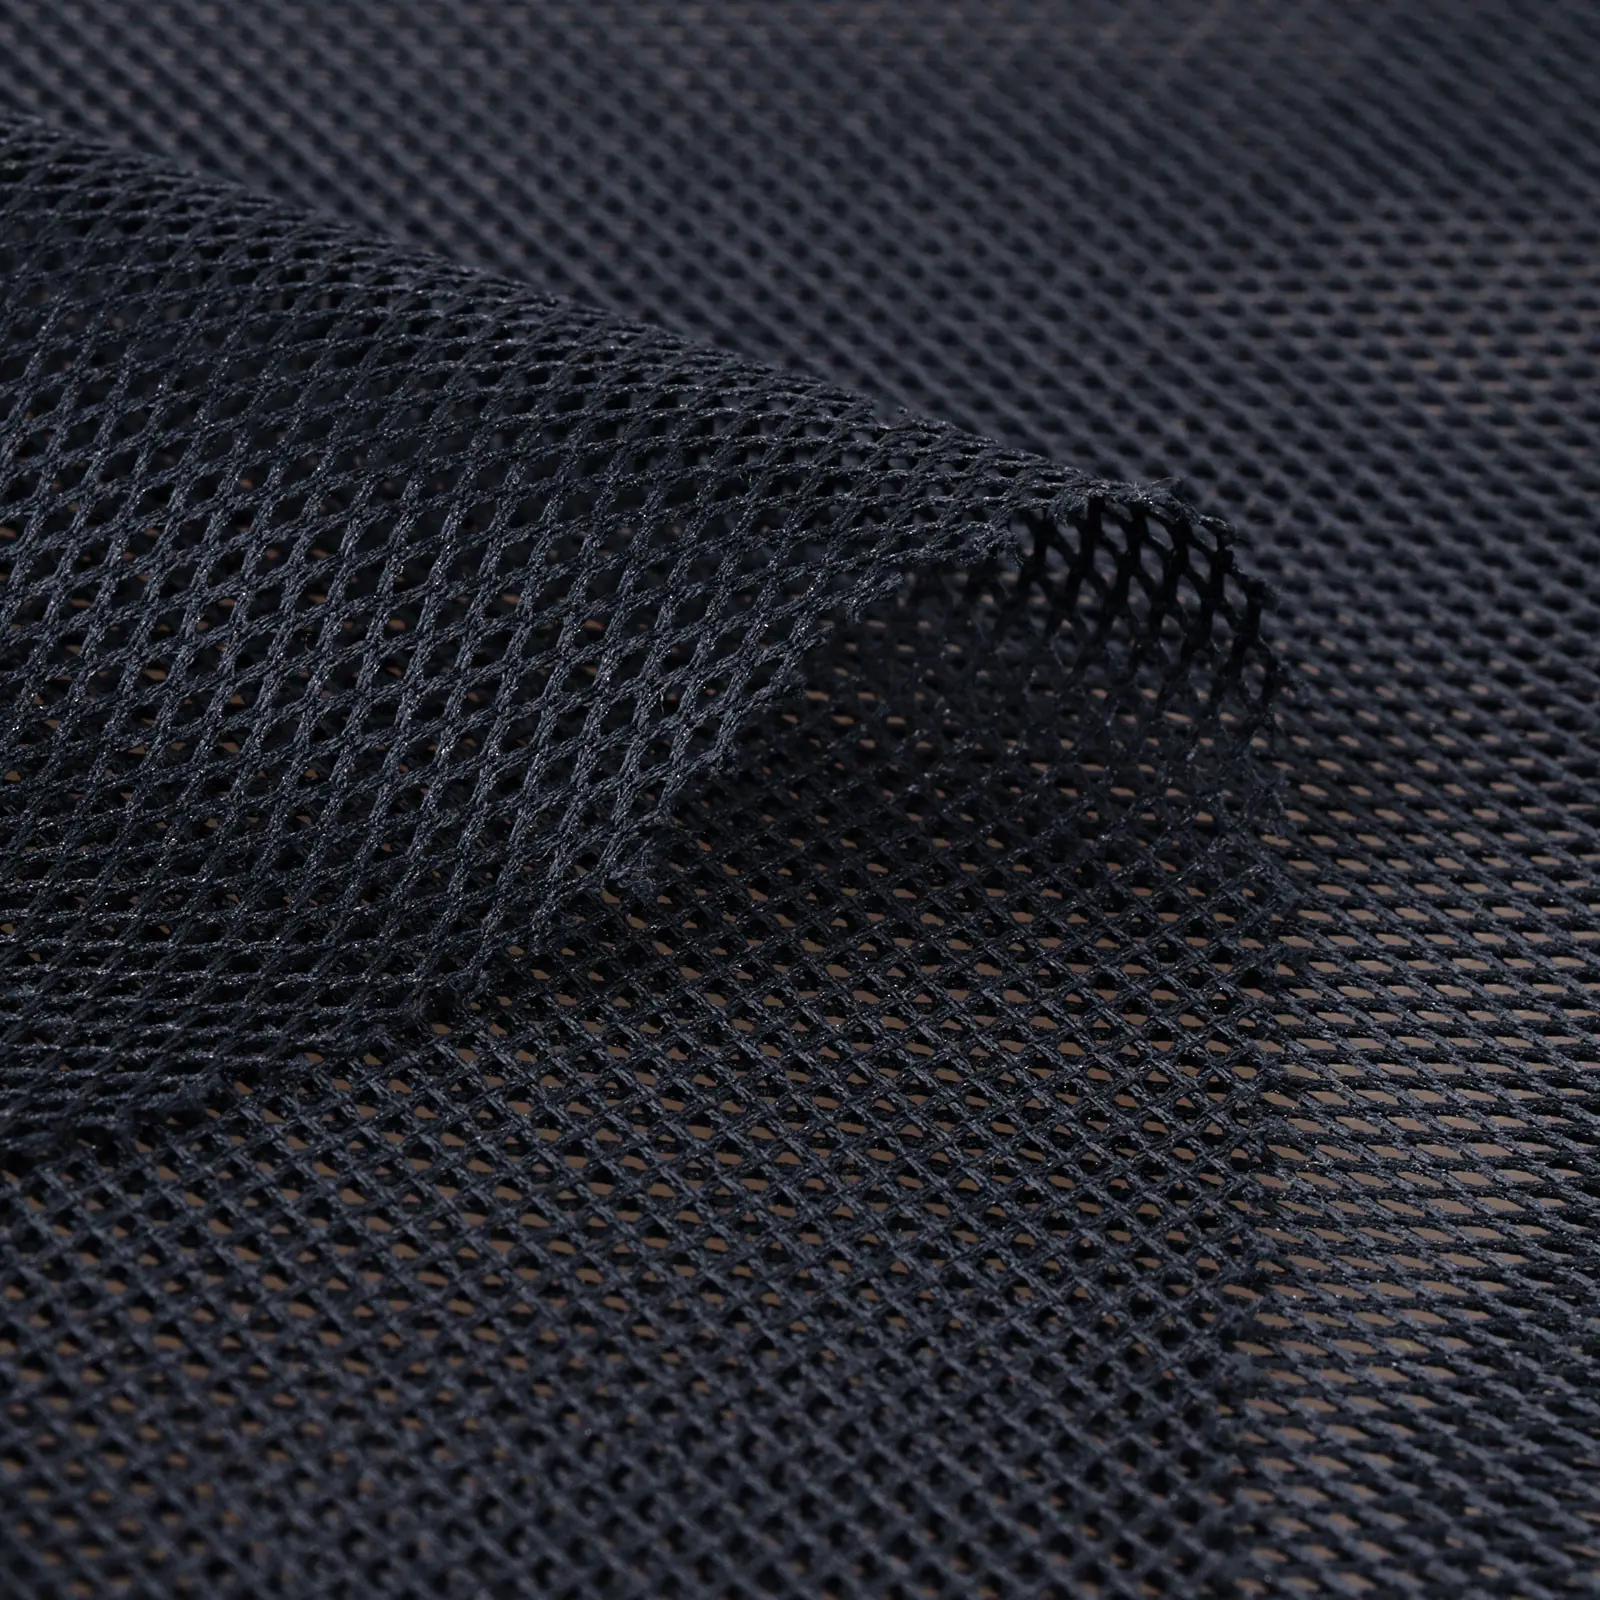 https://www.jongstit.com/en/images/tricot-mesh-fabric-g-tm4084+fabric+15300.webp